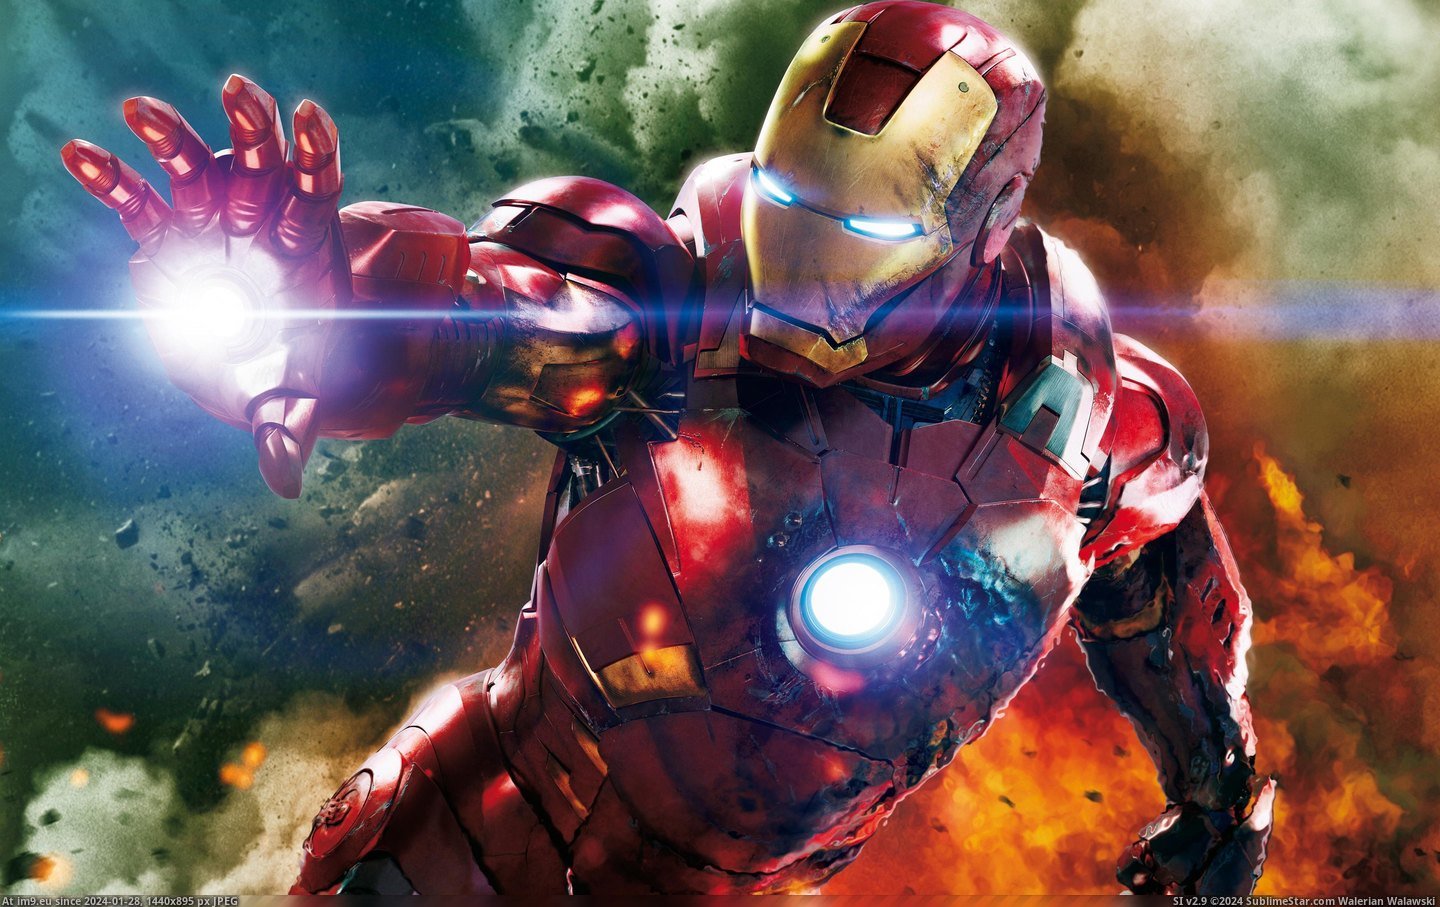 #Wallpaper #Man #Avengers #Wide #Iron The Avengers Iron Man Wide HD Wallpaper Pic. (Bild von album Unique HD Wallpapers))